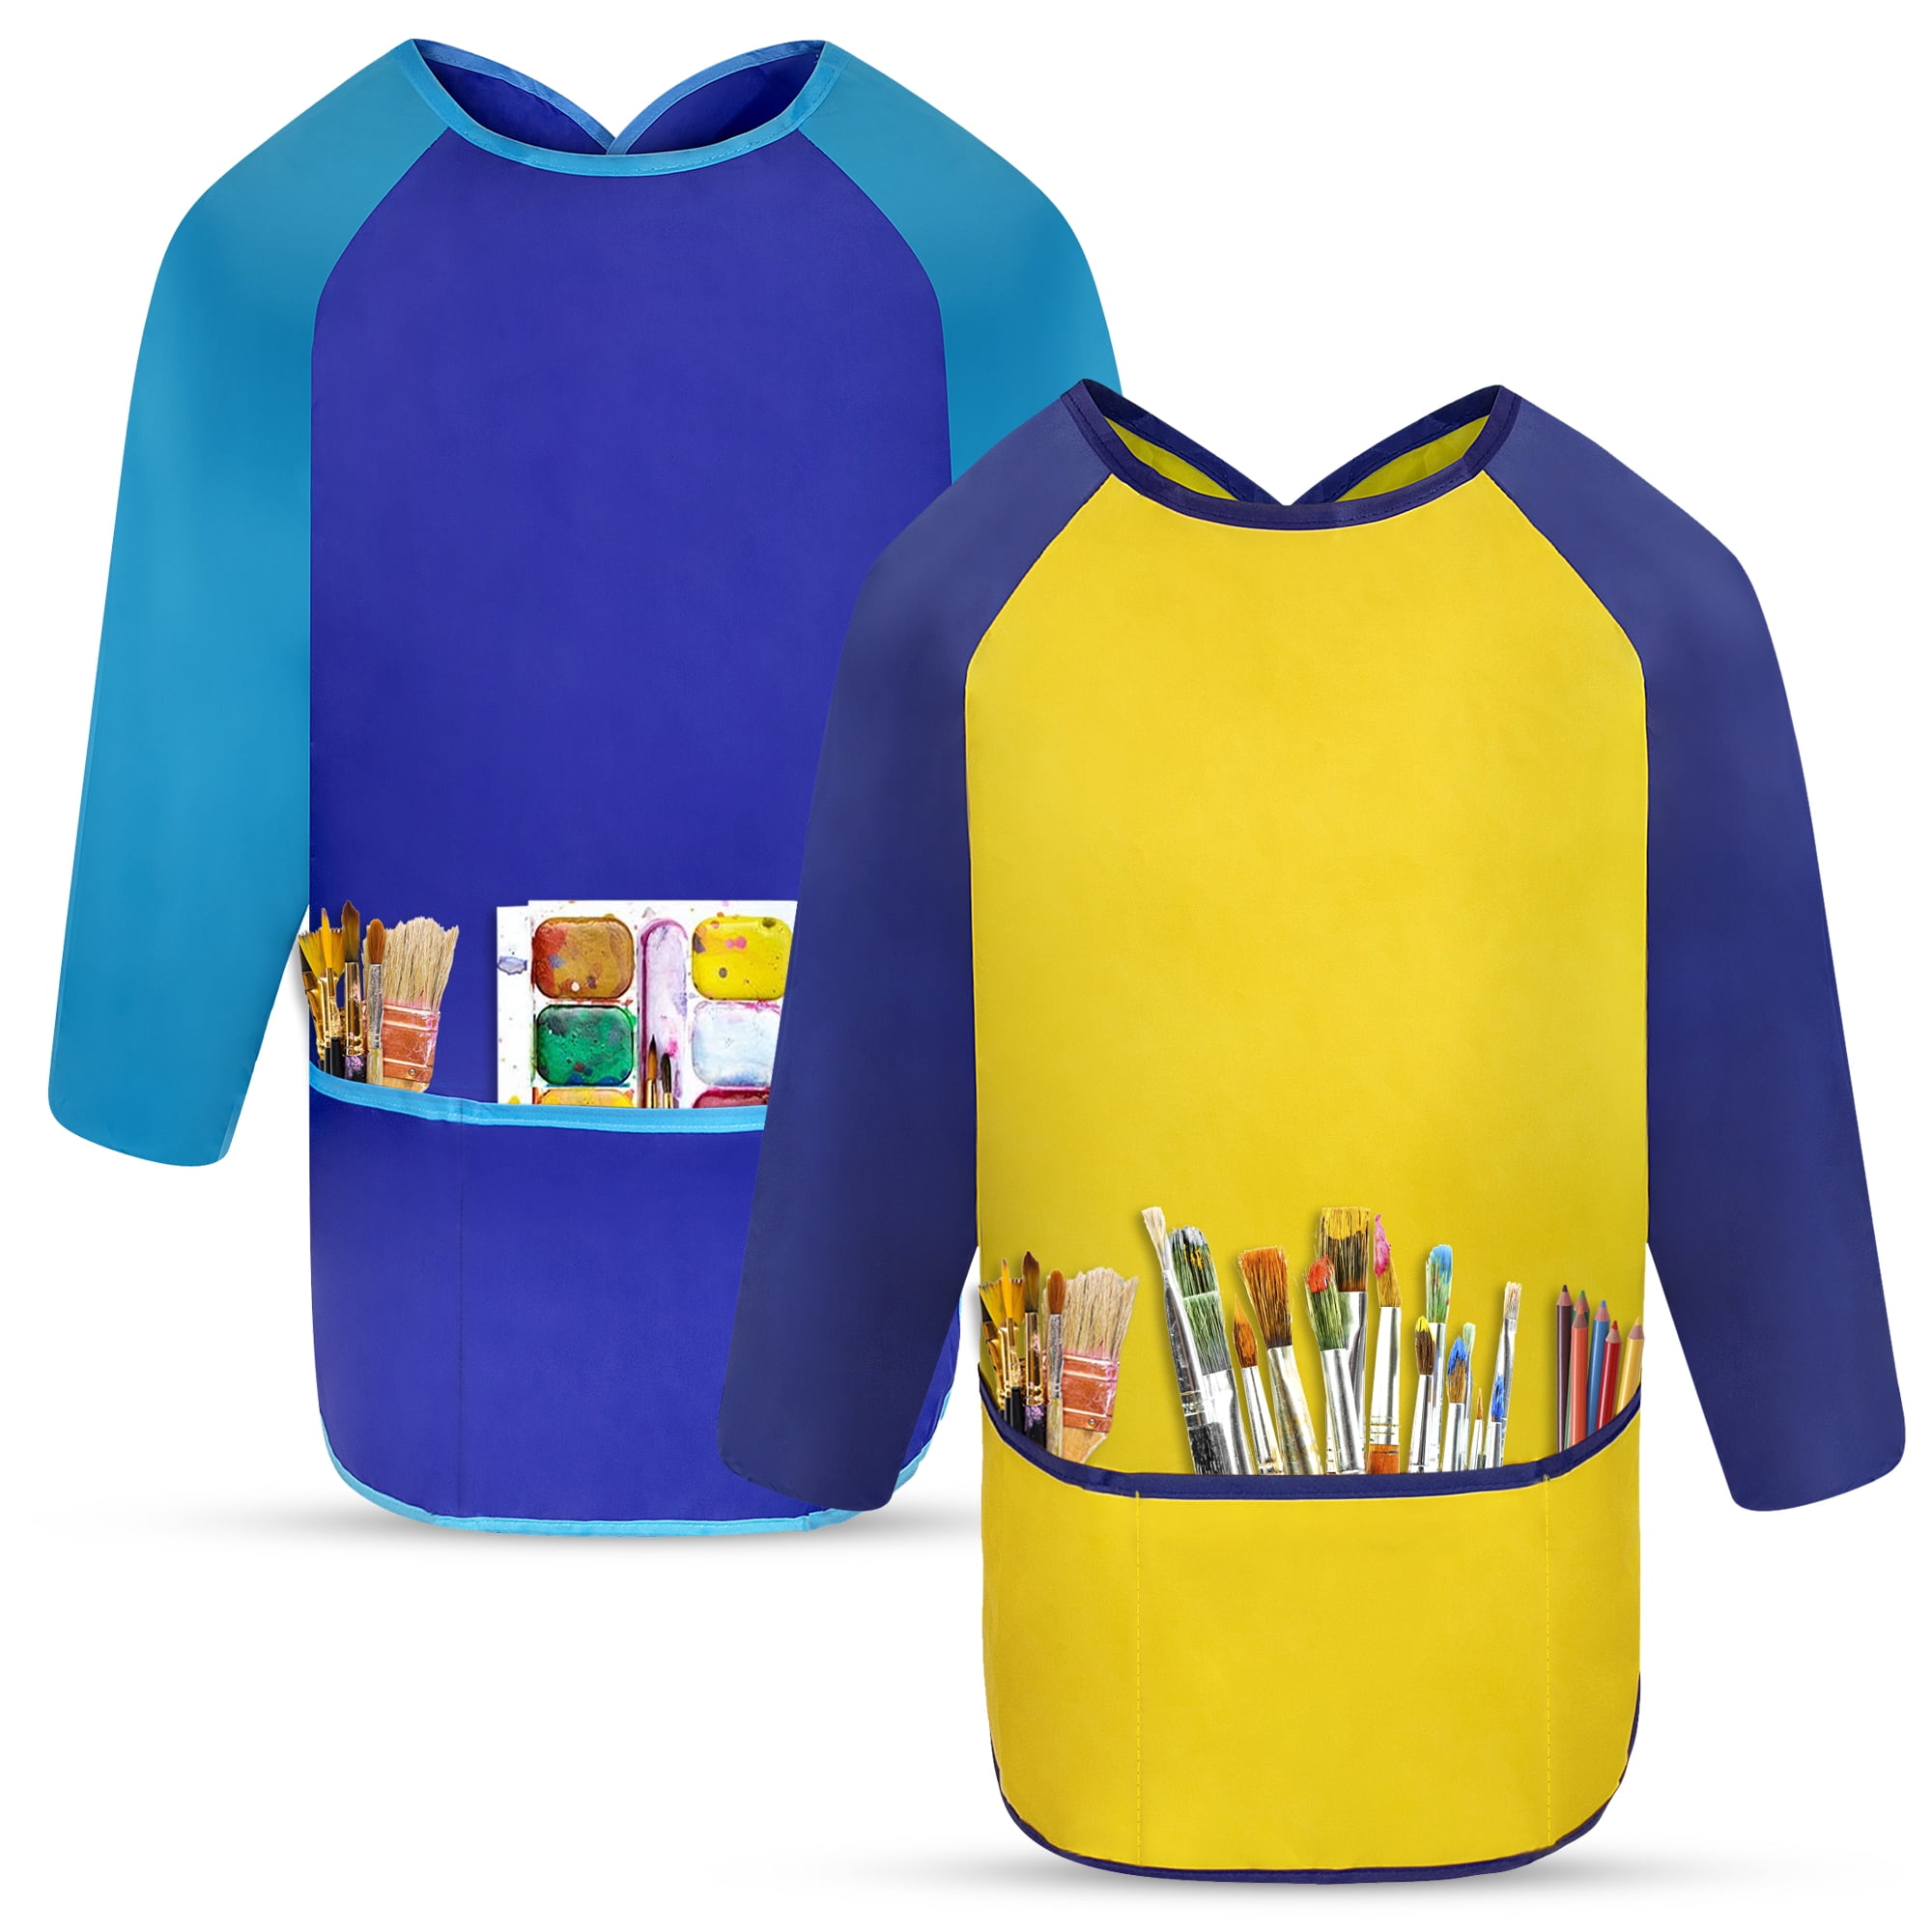 Playkidiz Art Kids Smock Paint Shirt, Set of 2 Preschool Artist Aprons, Kids Paint Smock Shirt for Kids.